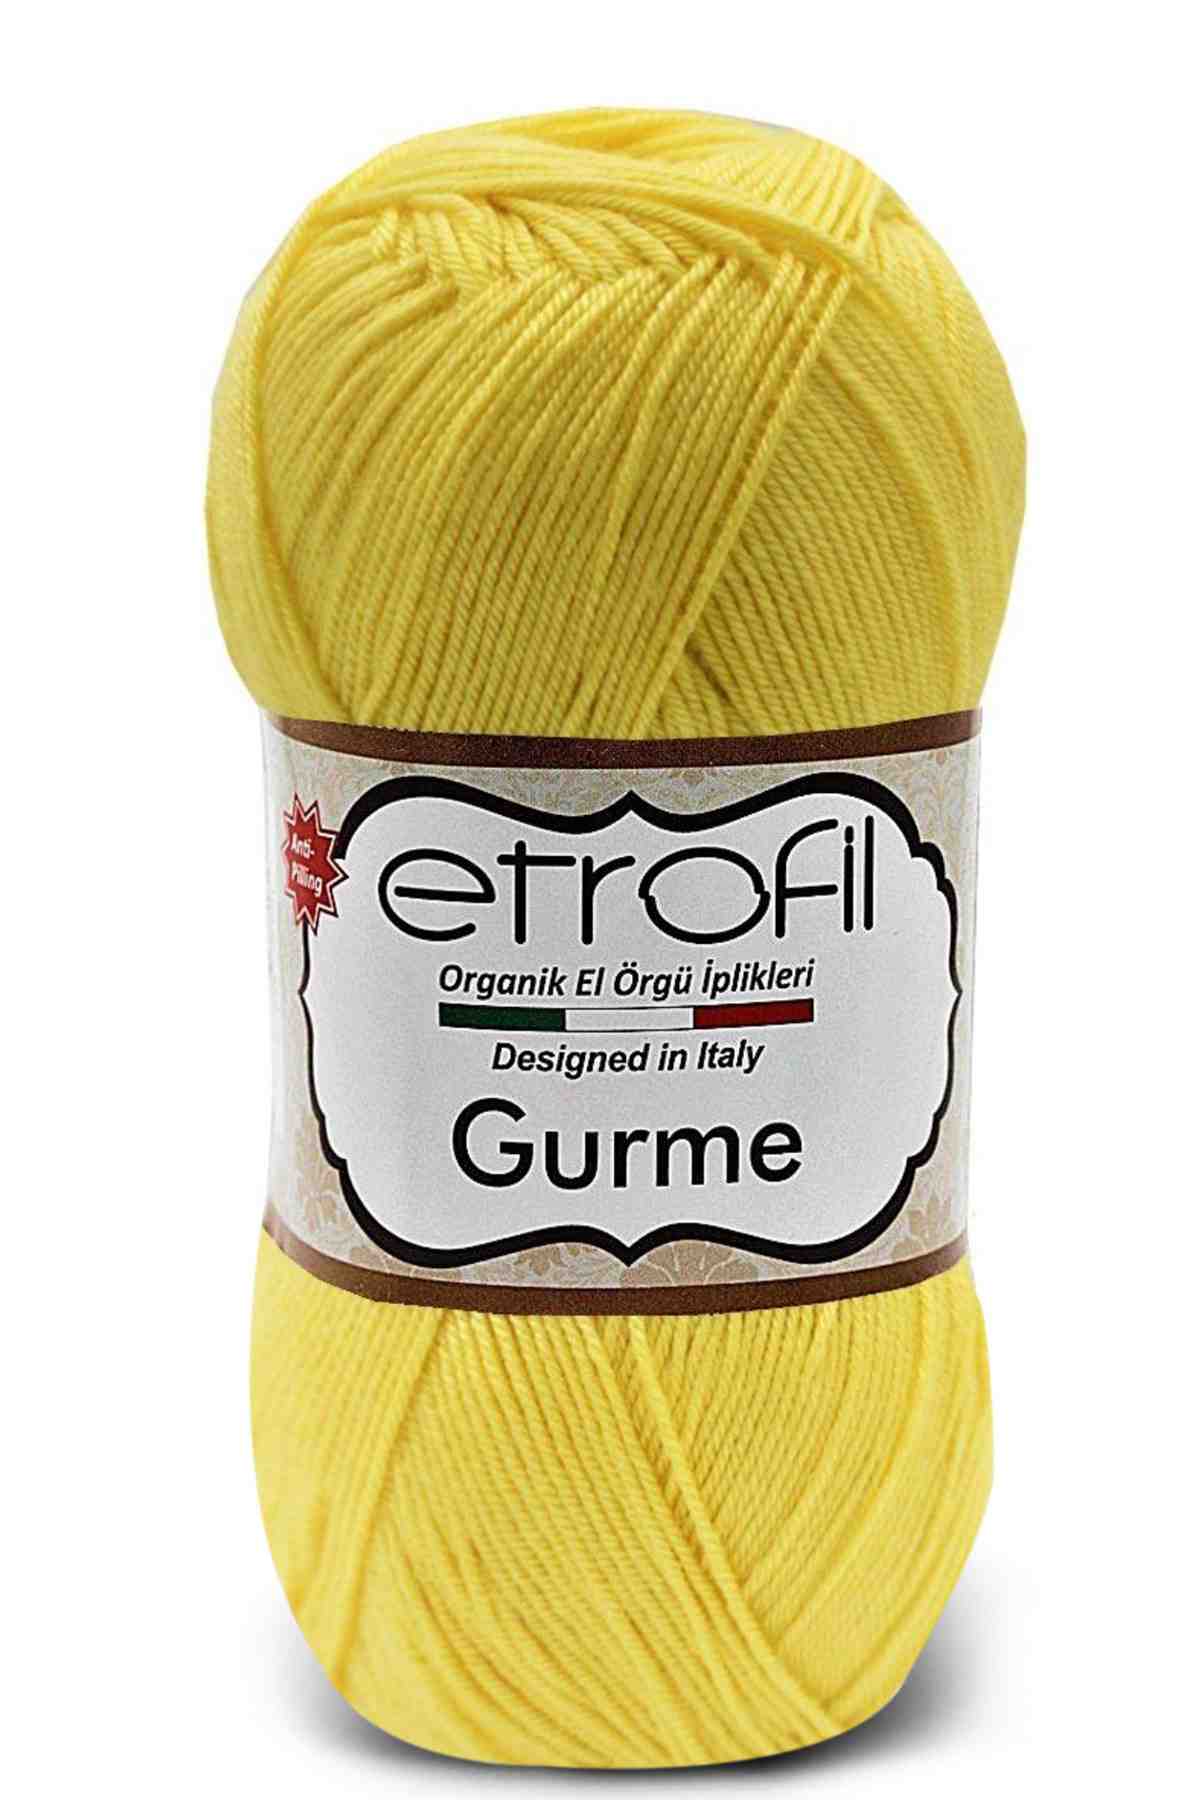 Etrofil Gurme Anti-Pilling Acrylic Yarn